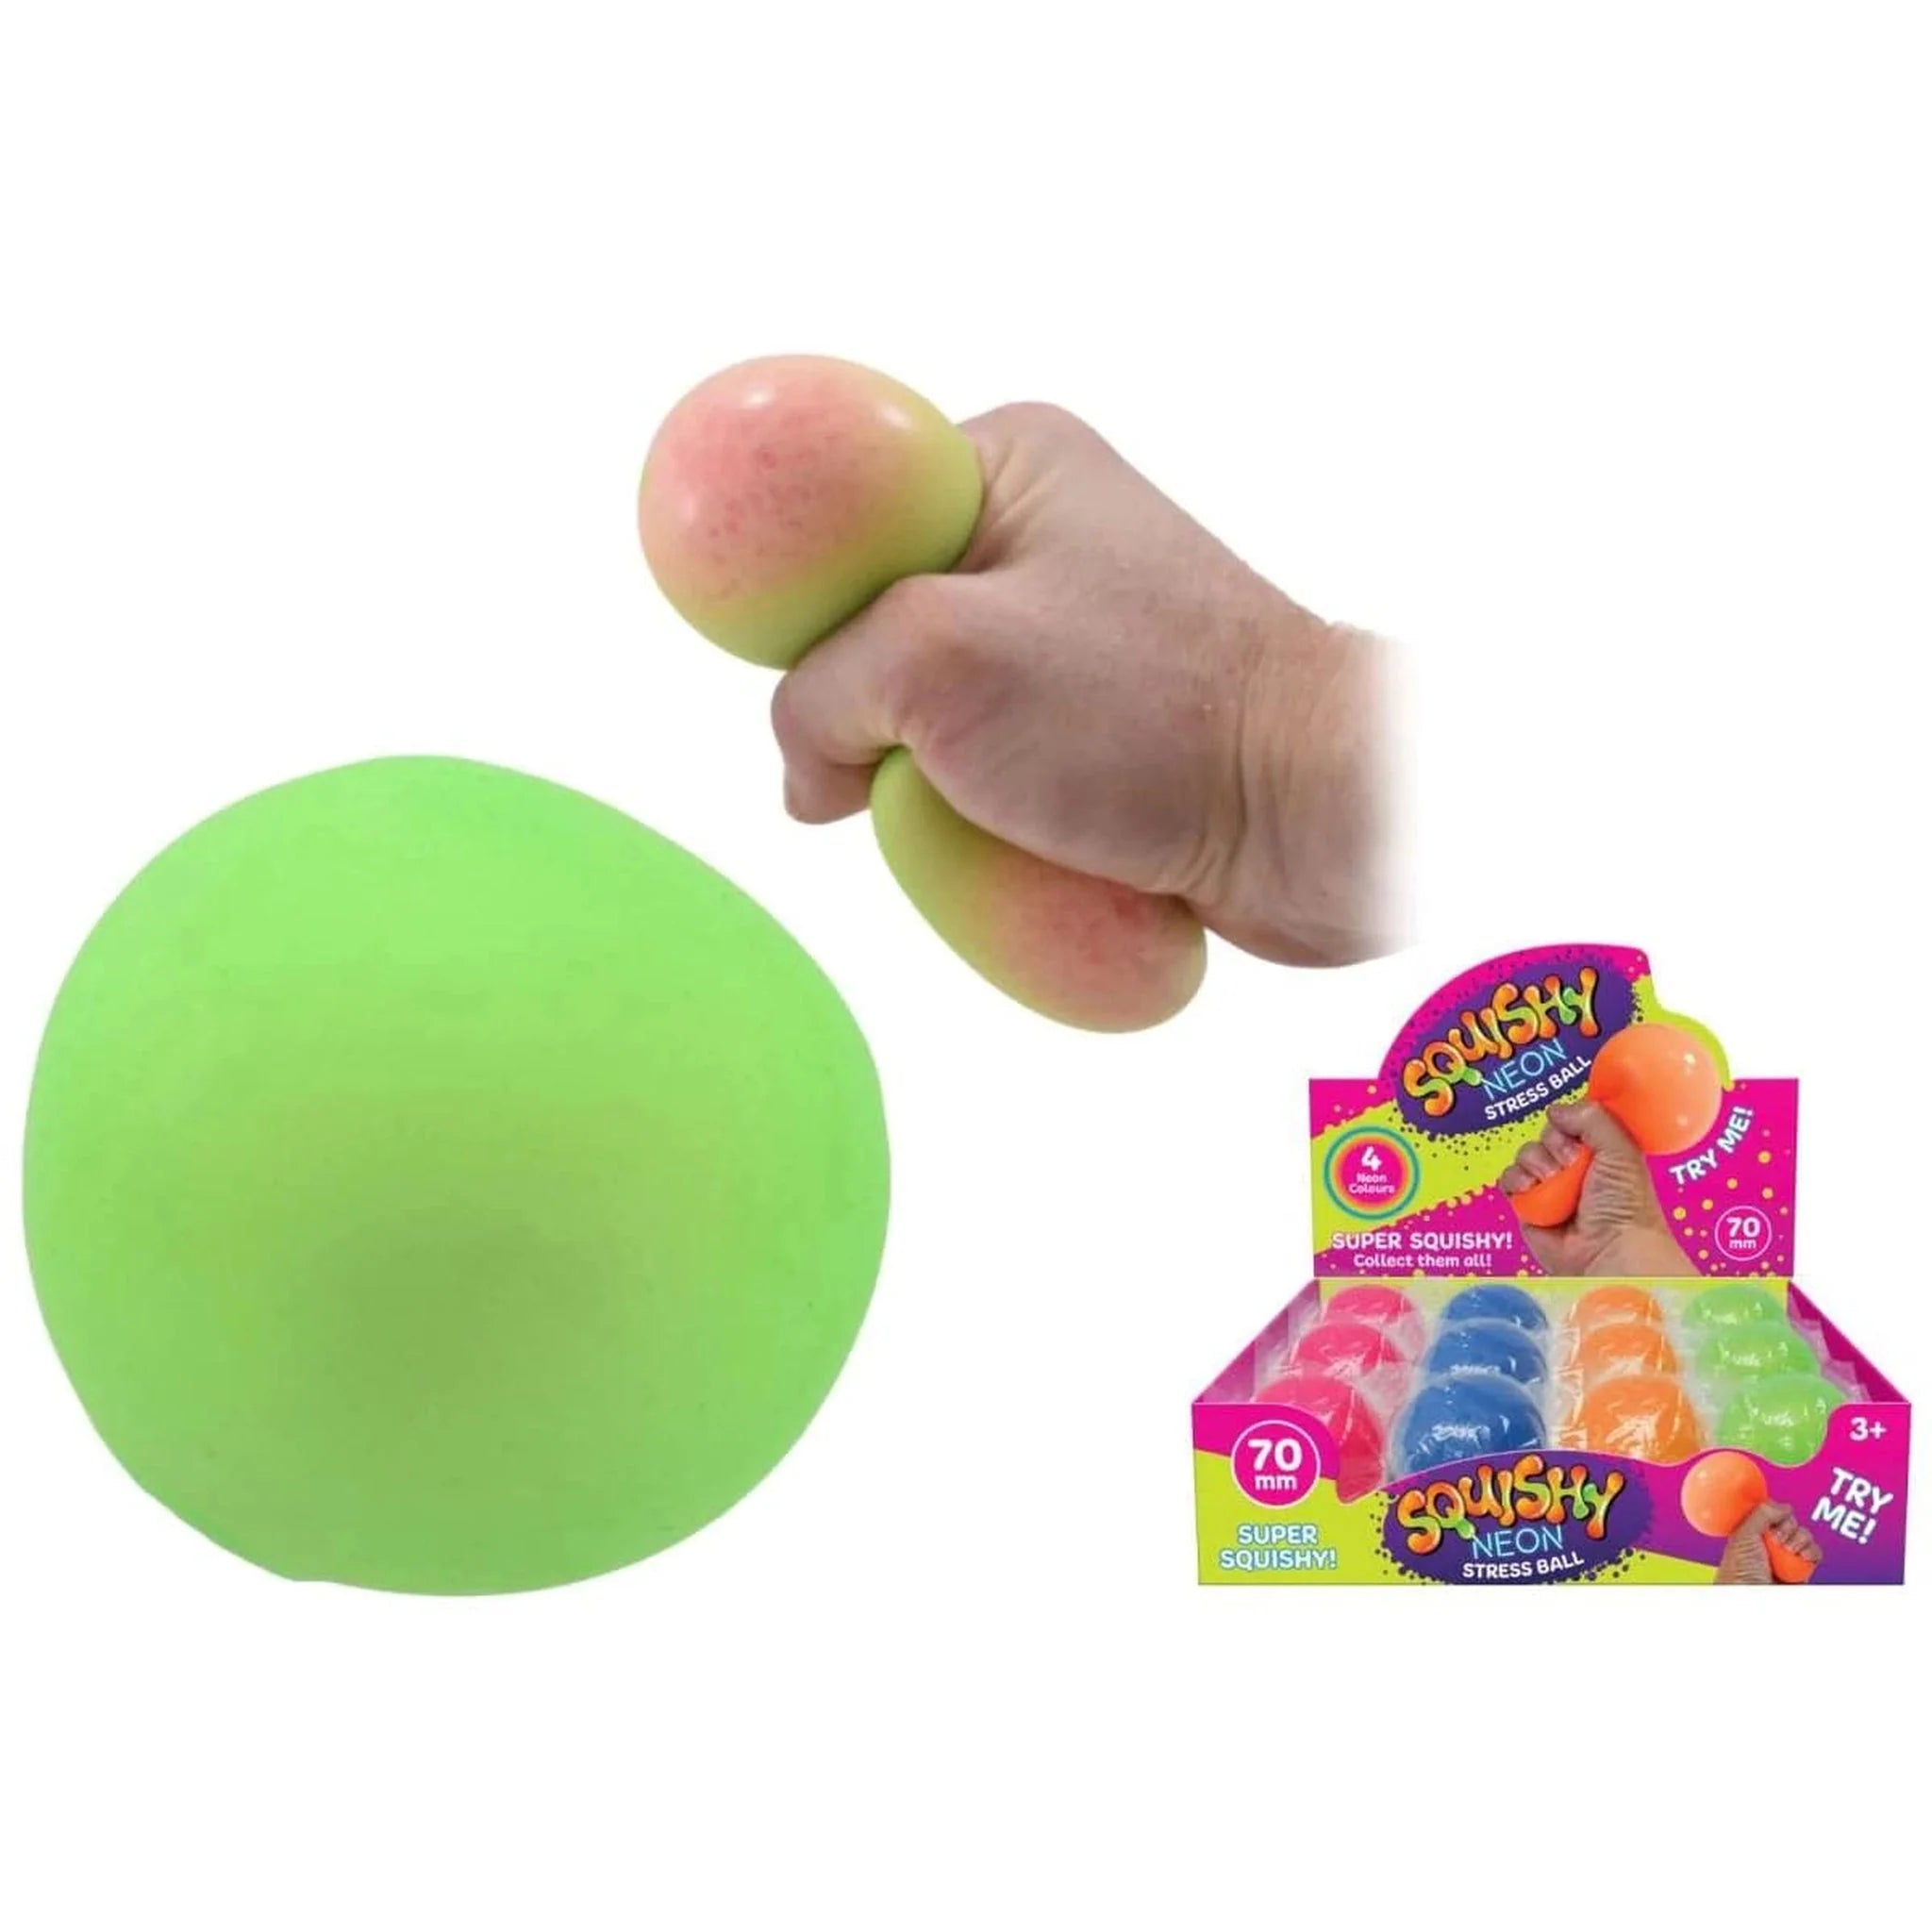 Mini Squishy Neon Ball - Kids Party Craft